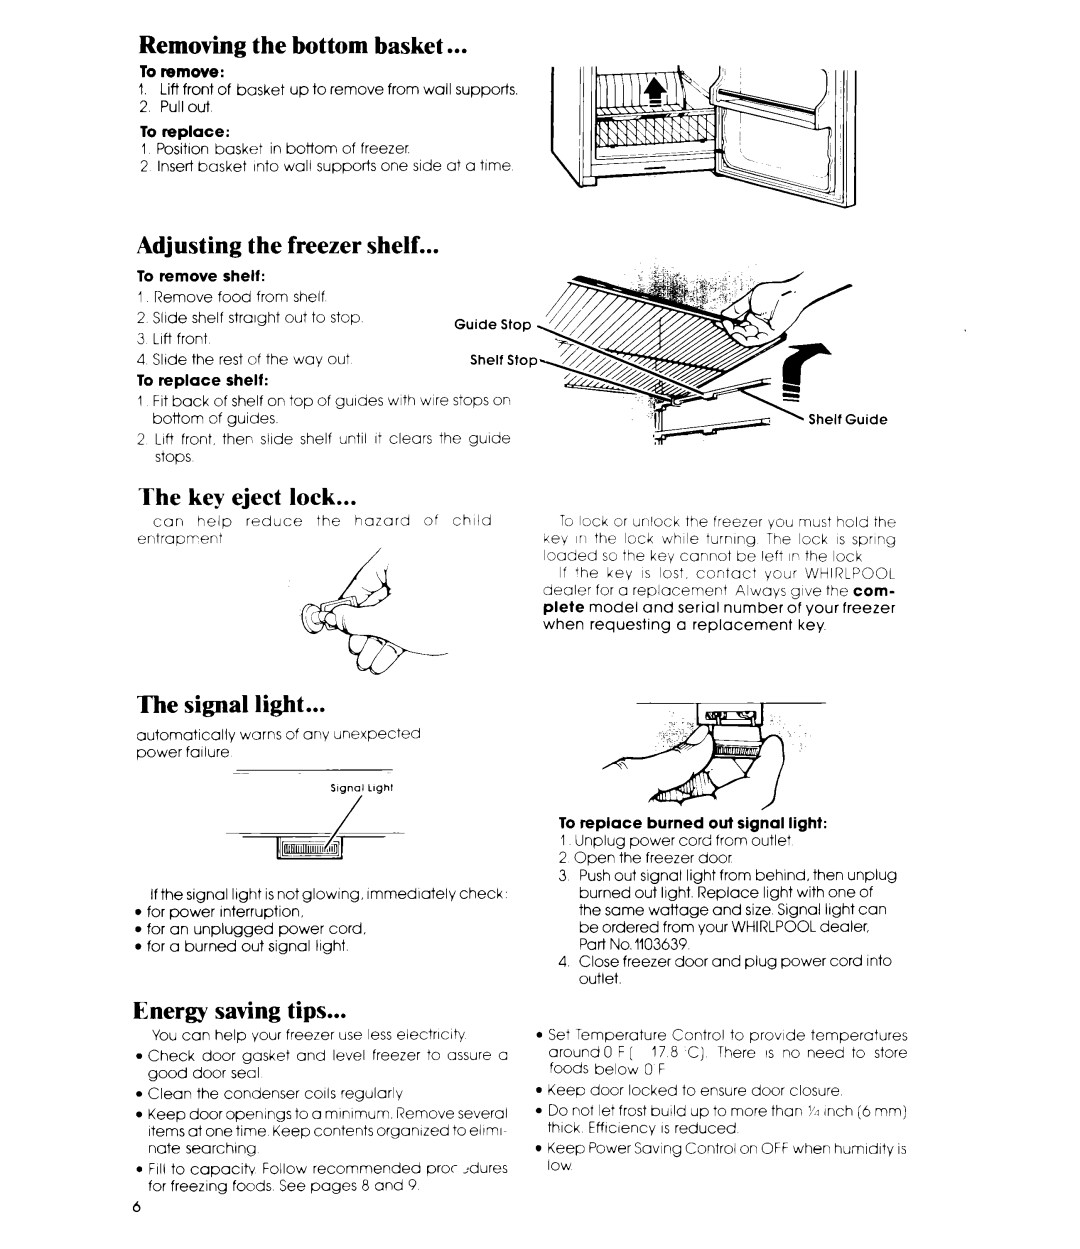 Whirlpool EV190E manual Removing the bottom basket, Adjusting the freezer shelf, The key eject lock, The signal light 